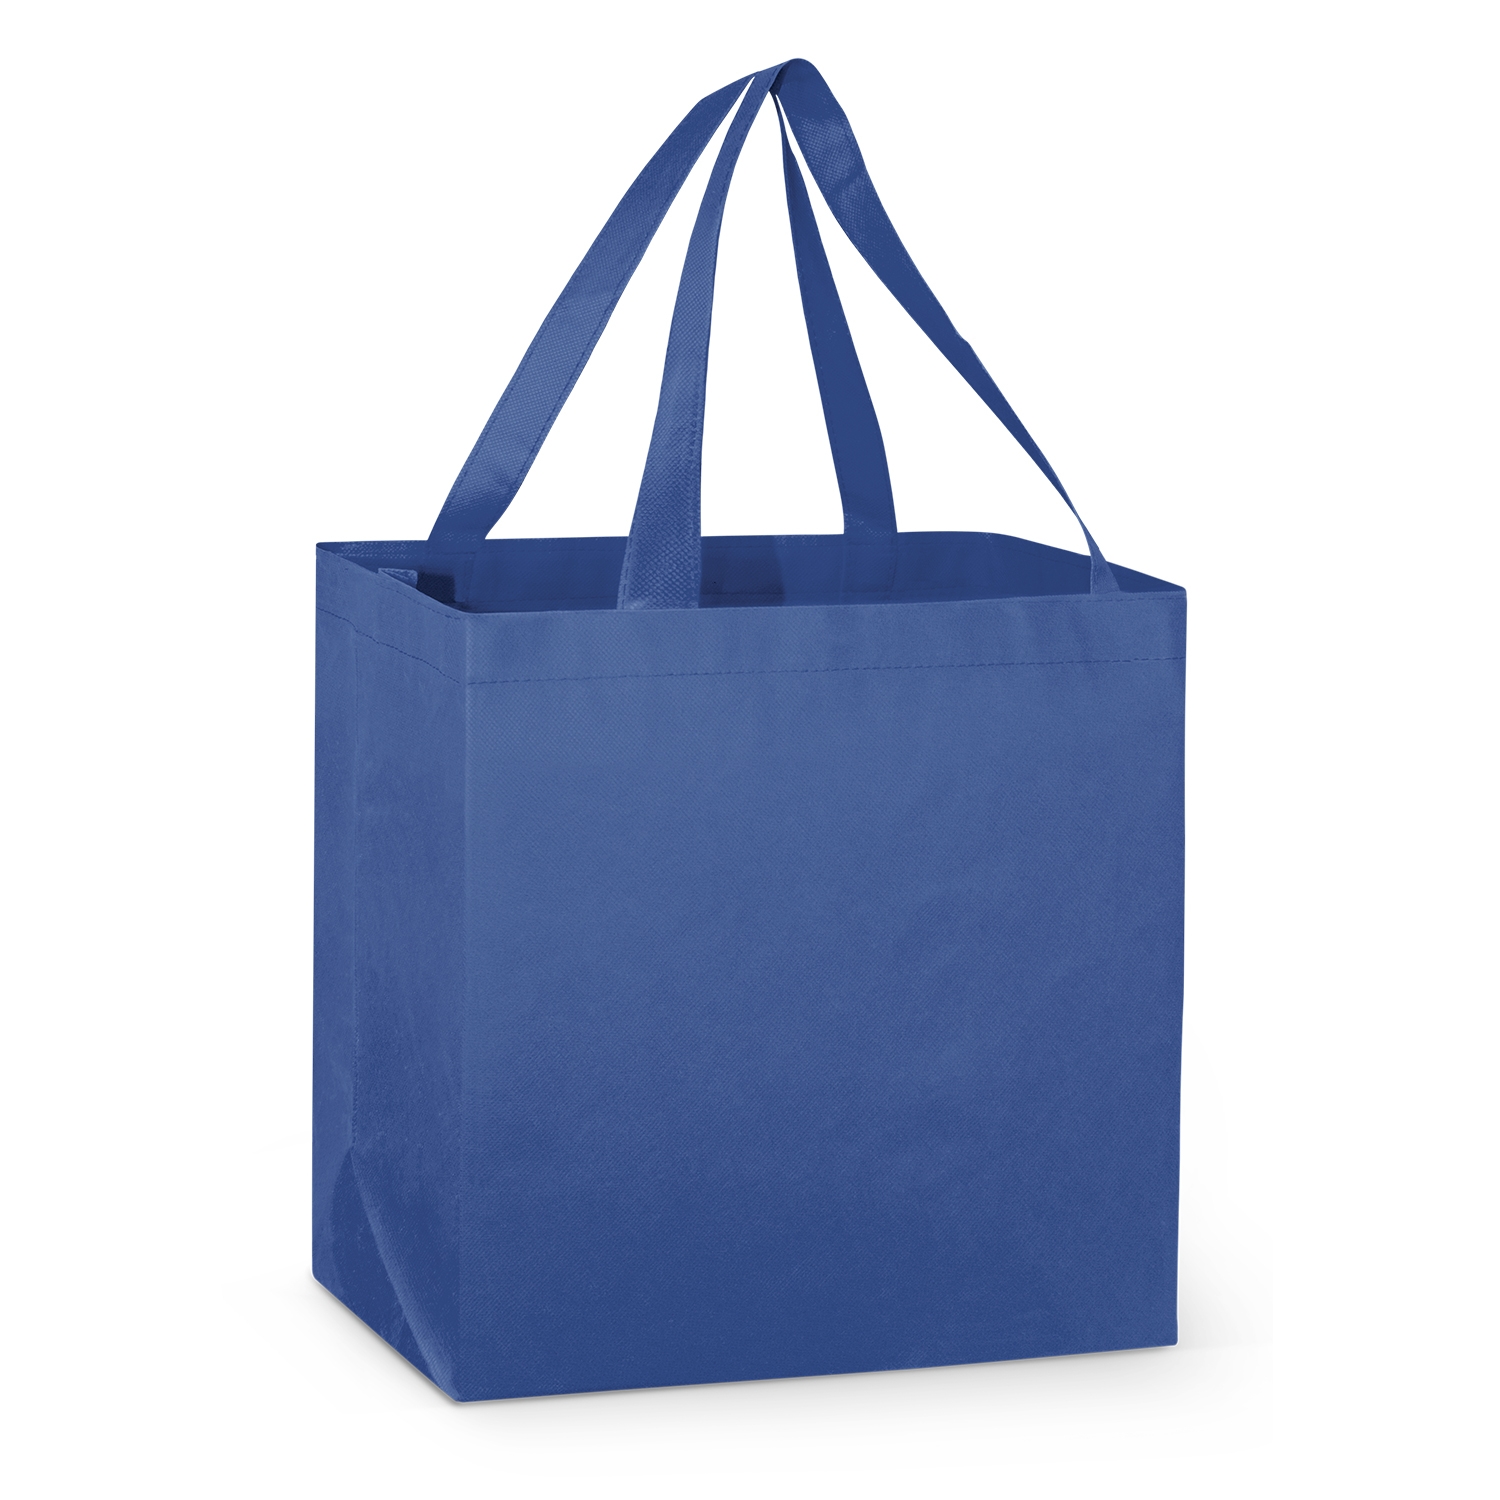 City Shopper Tote Bag - Image Group